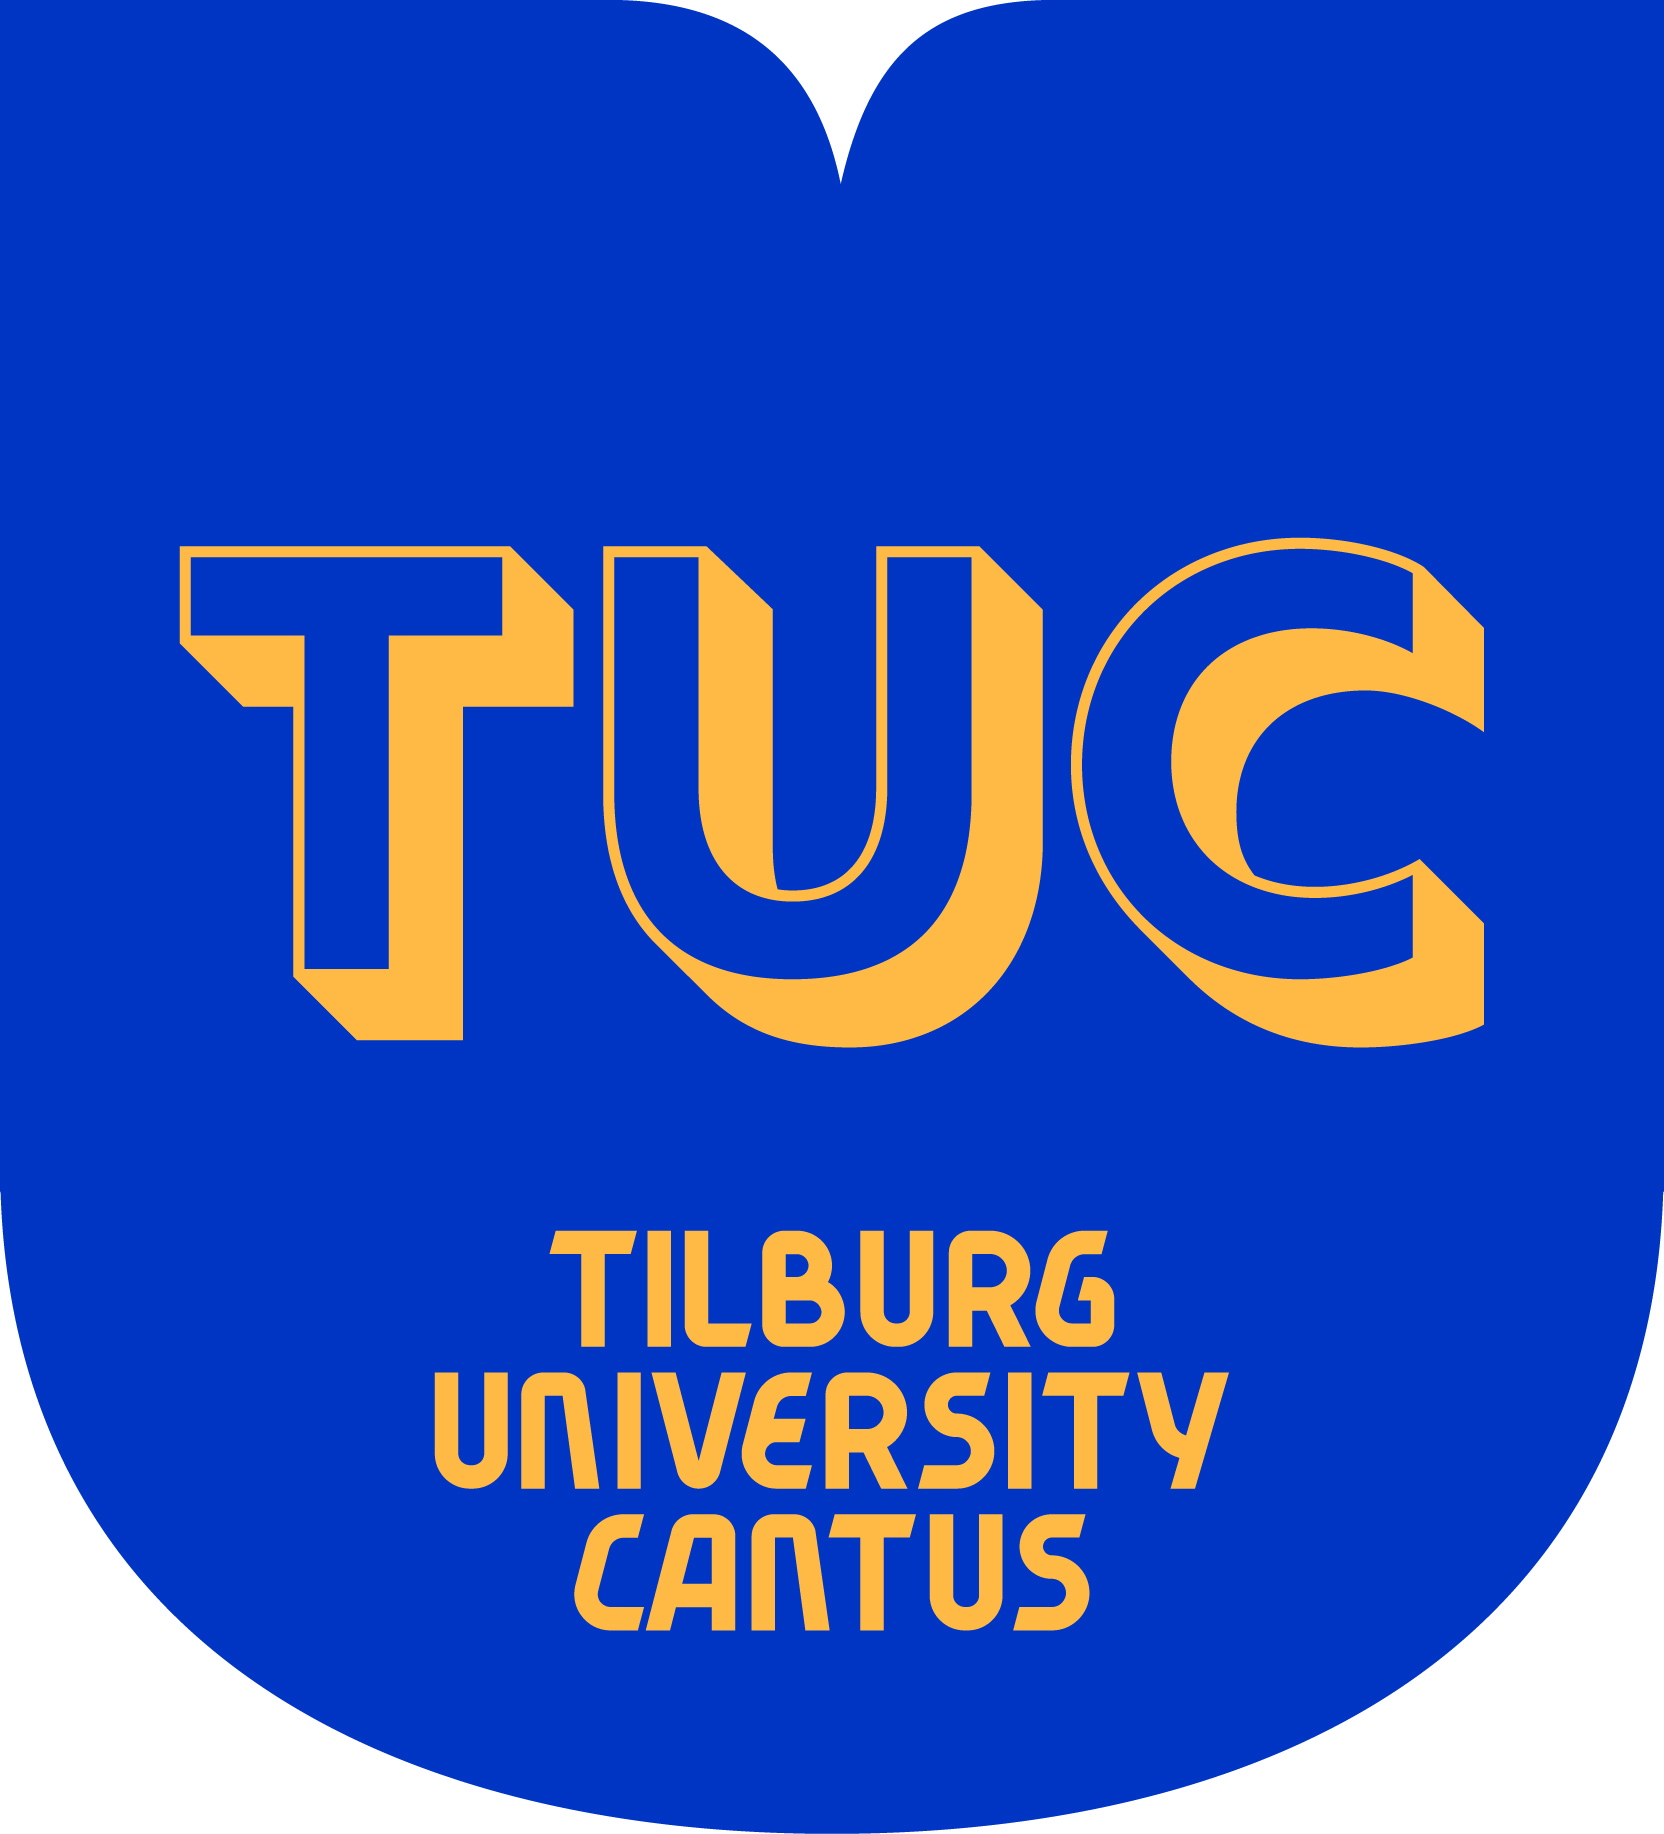 (c) Tilburguniversitycantus.nl